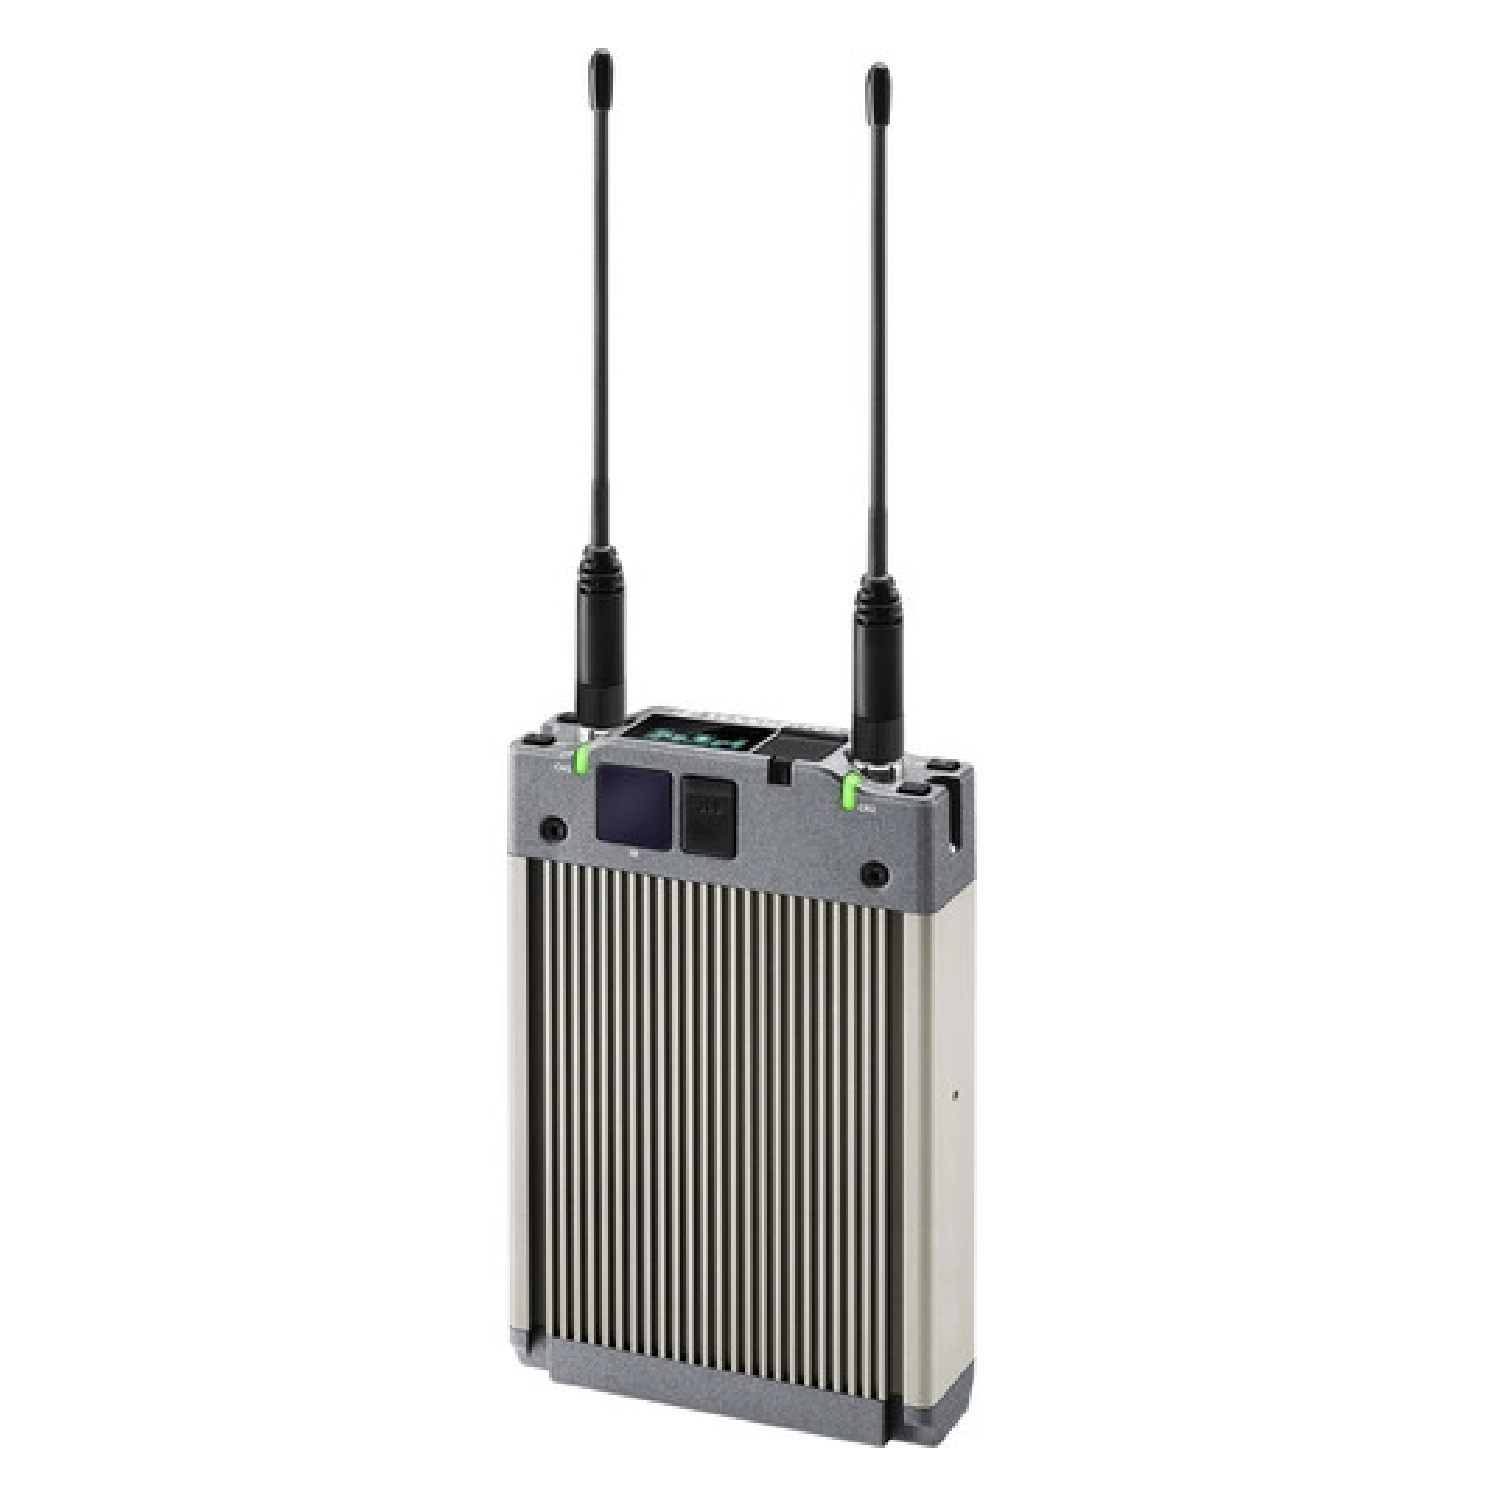 Dual-Channel Slot Mount Wireless Receiver 470 to 653 MHz   EK 6042 A sennheiser